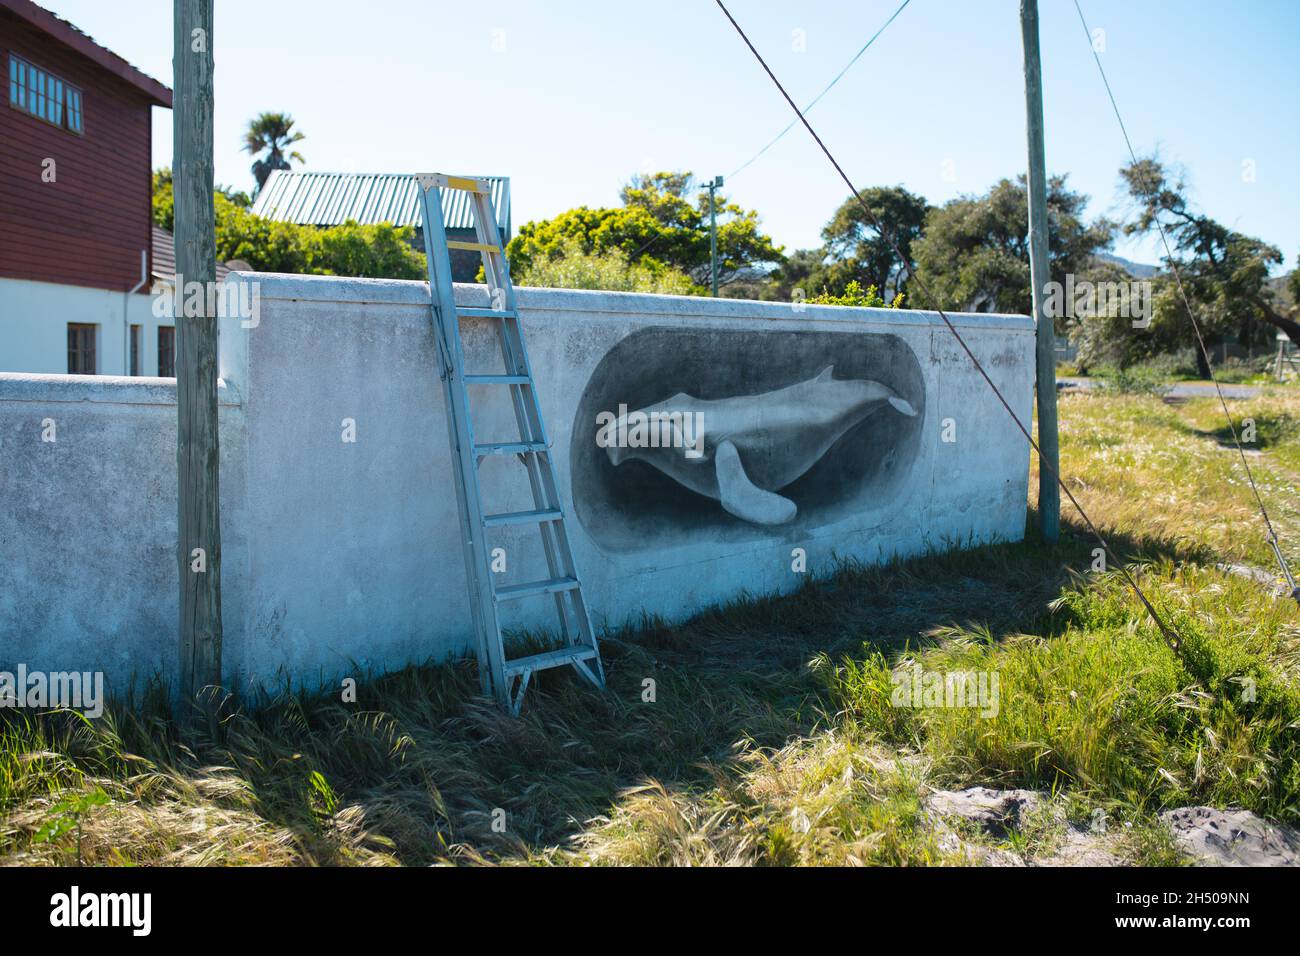 Leiter an der Wand mit kreativer Walmalerei an sonnigen Tagen gelehnt Stockfoto